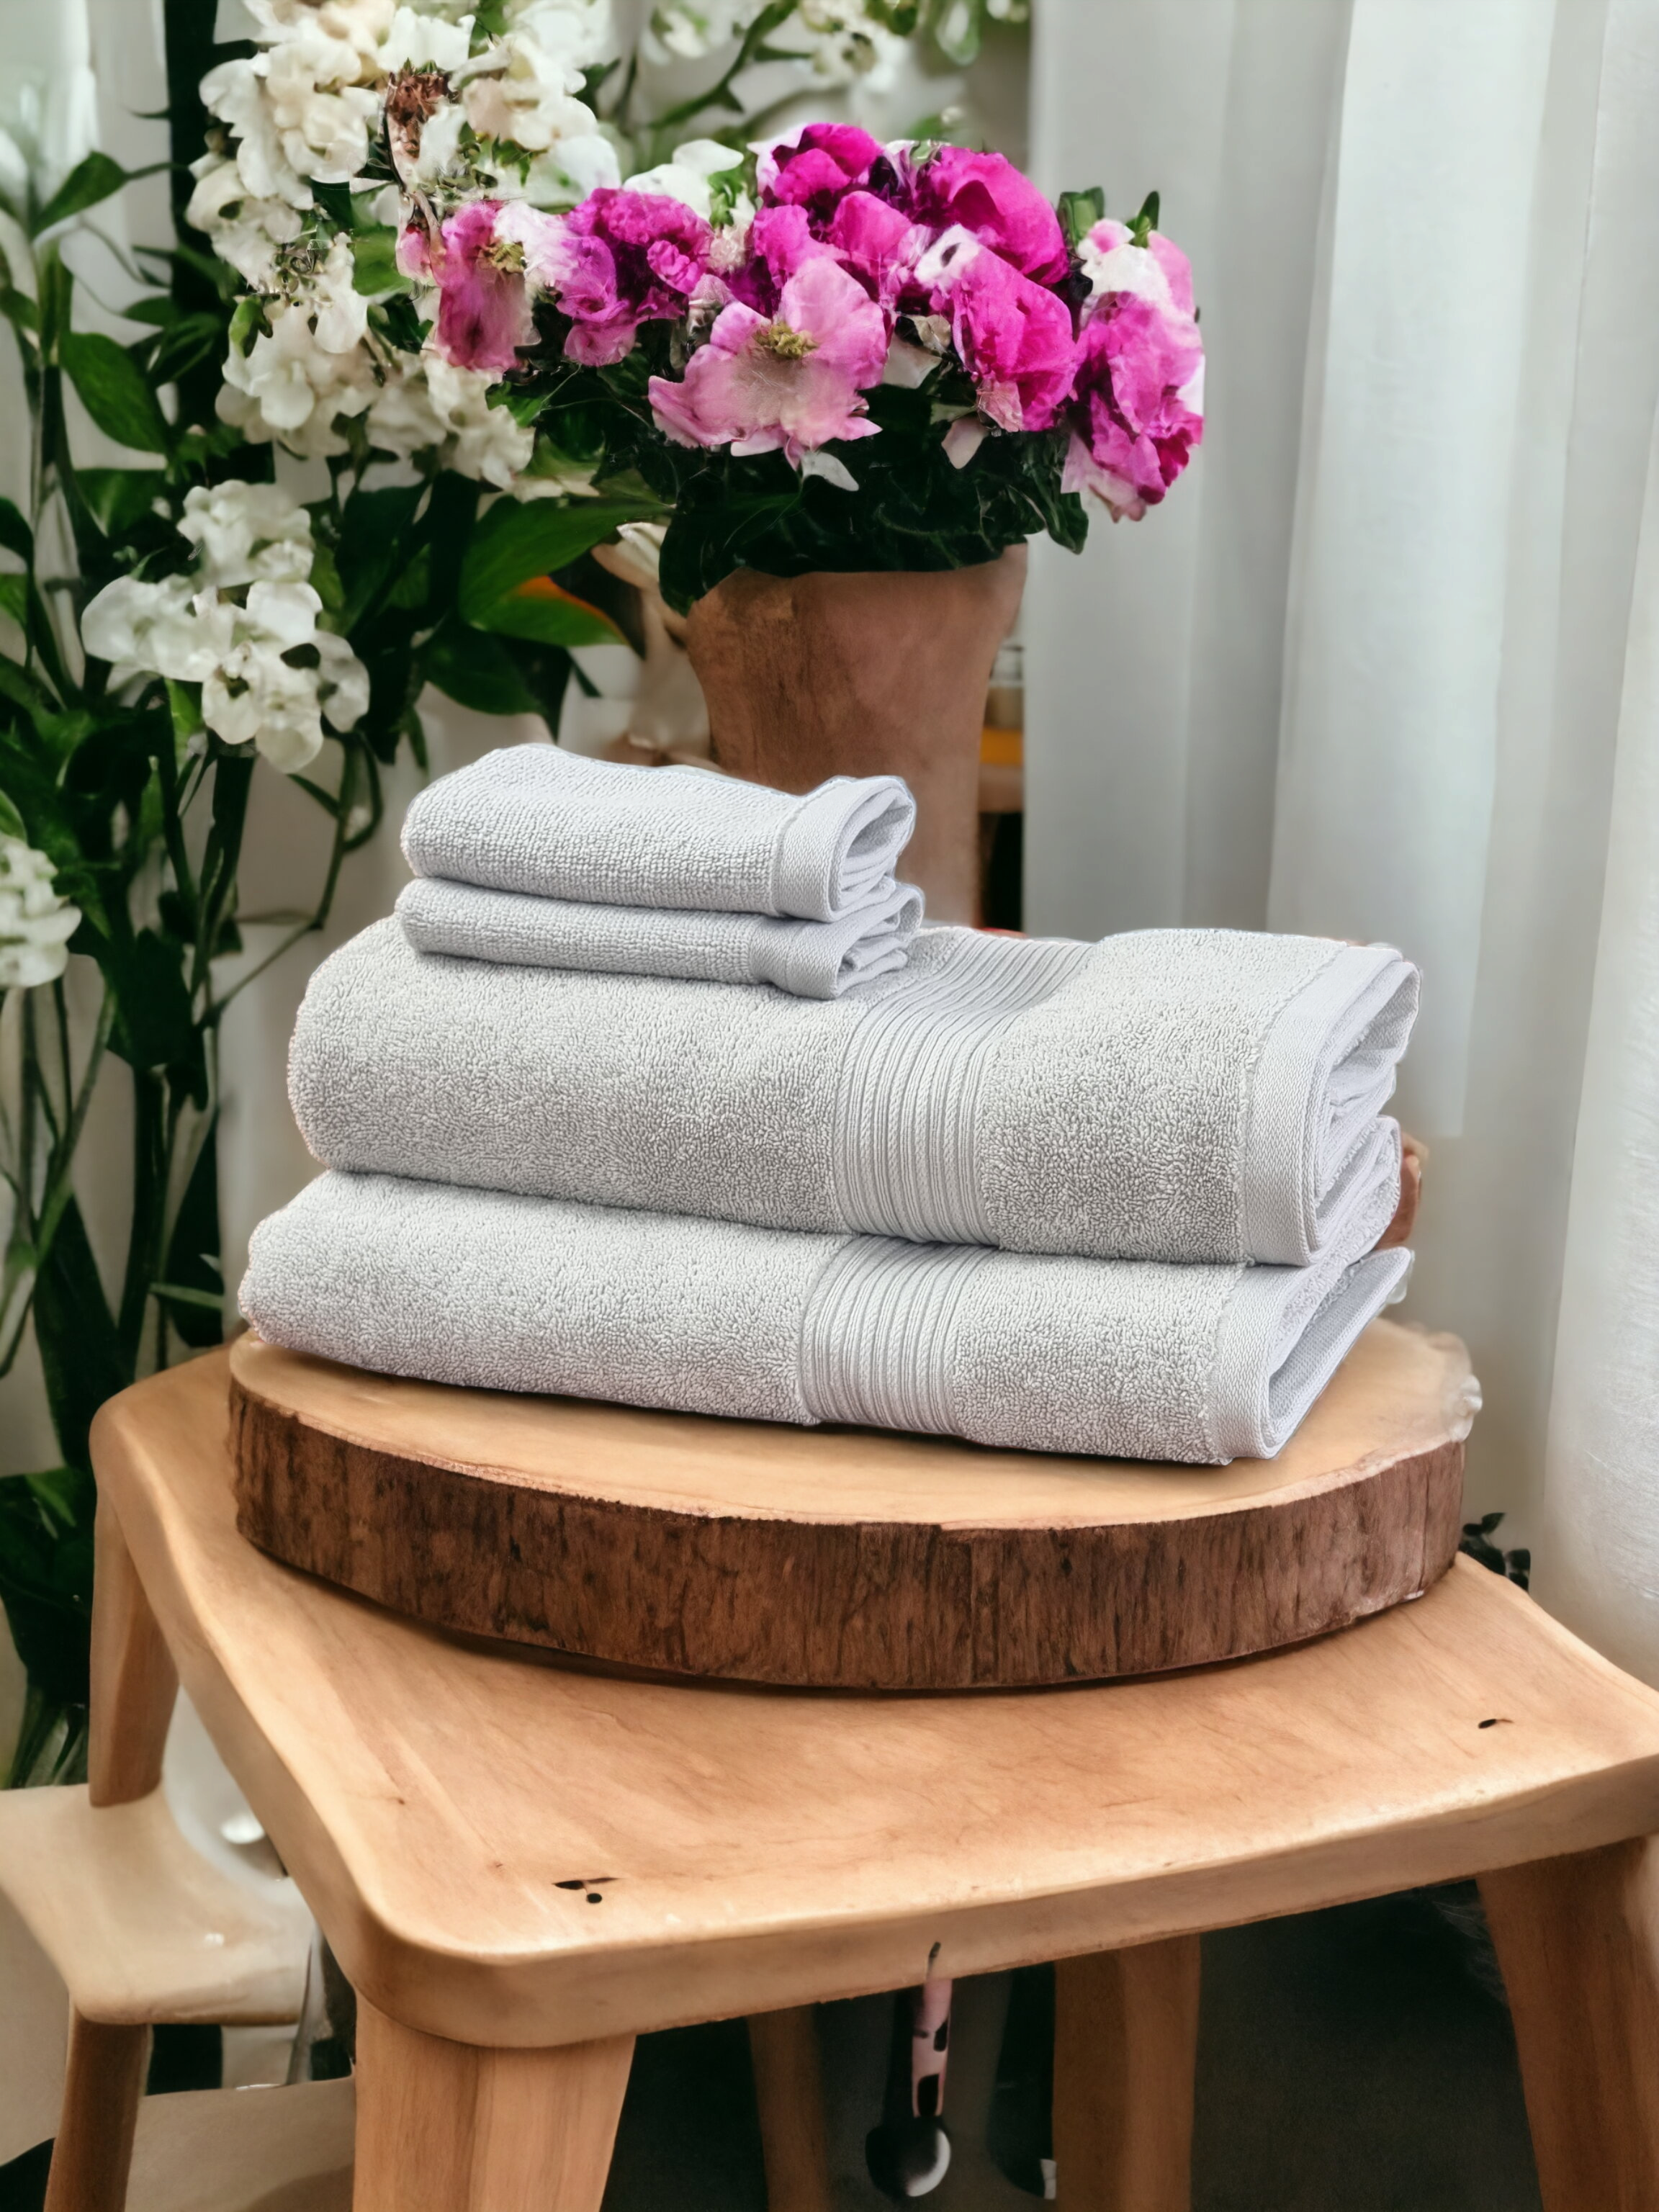 Luxury Bath Towel Set with Face Cloths